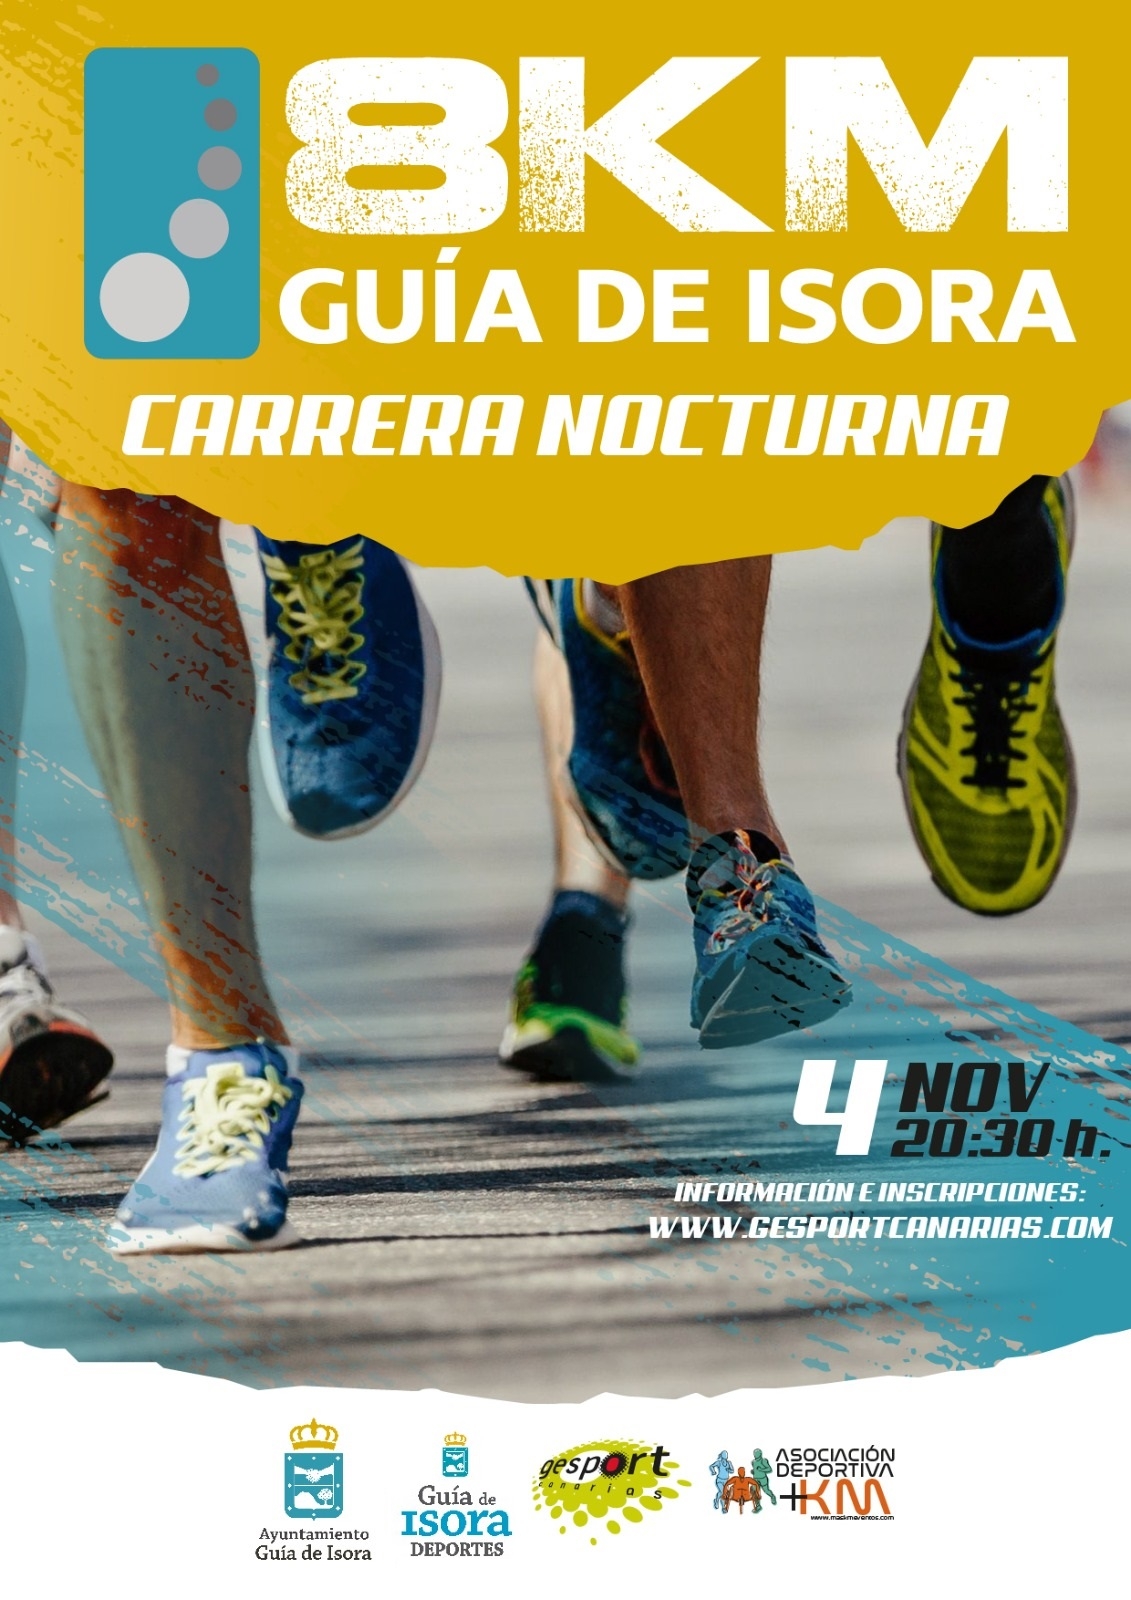 CARRERA NOCTURNA GUIA DE ISORA 2023 - Register